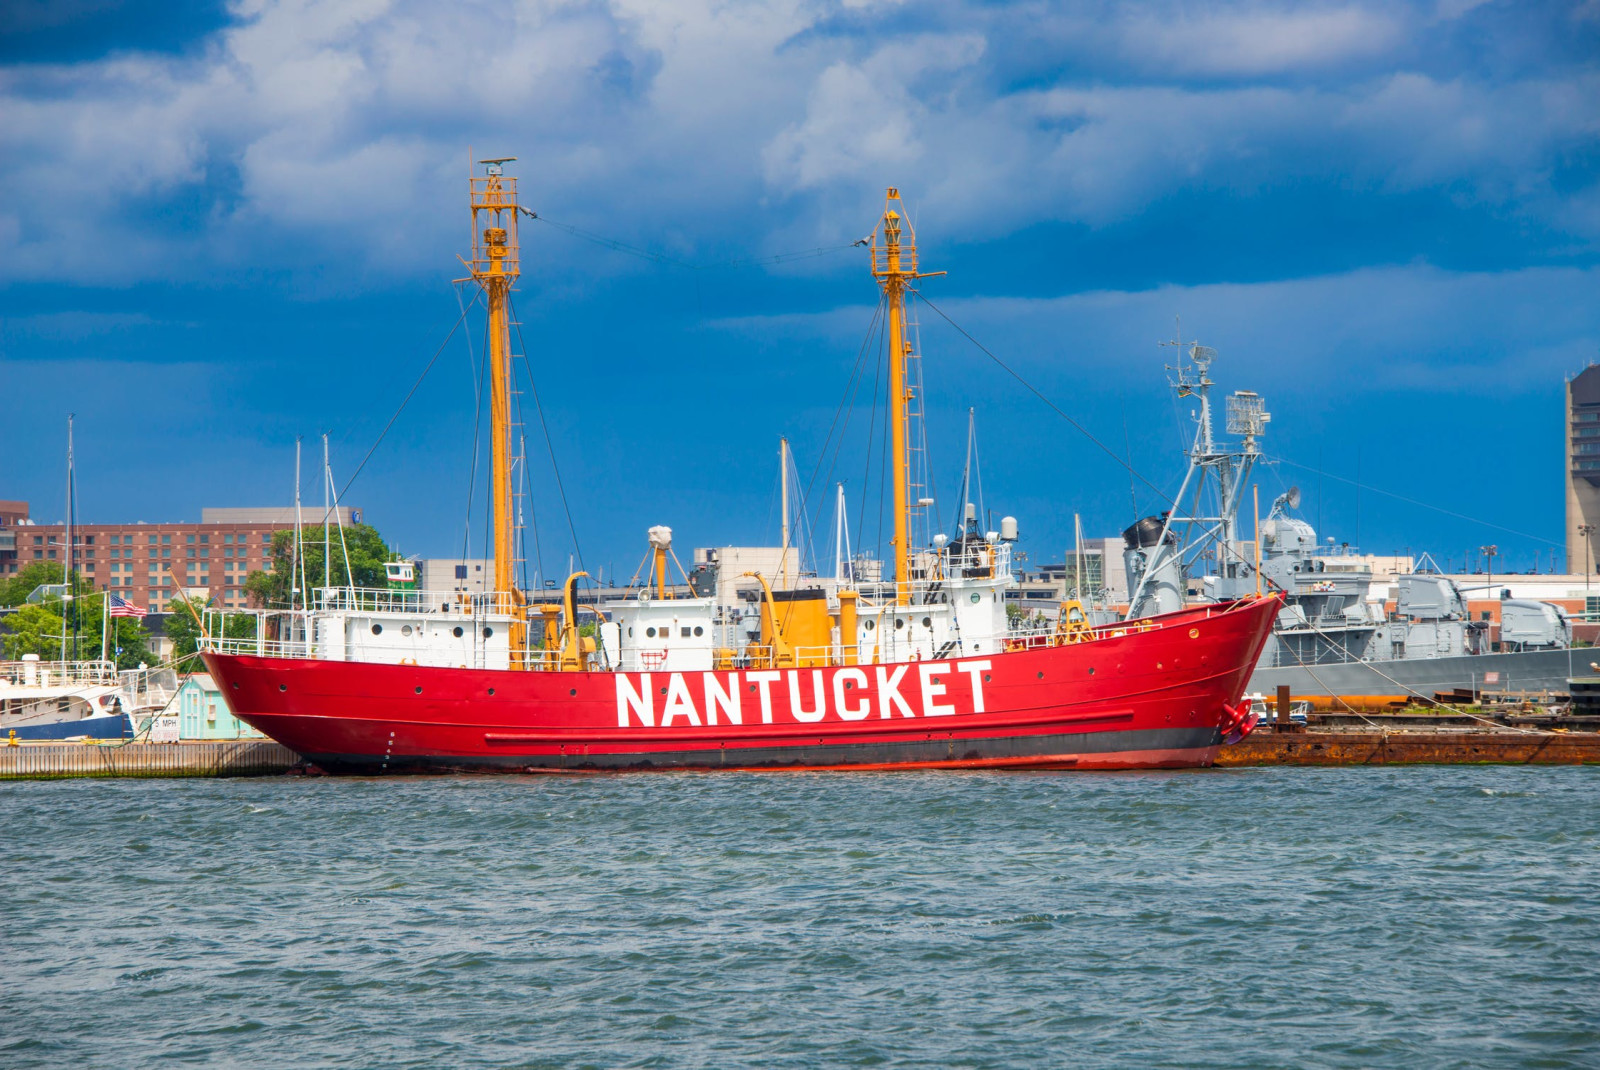 Boat in Nantucket, Massachusetts